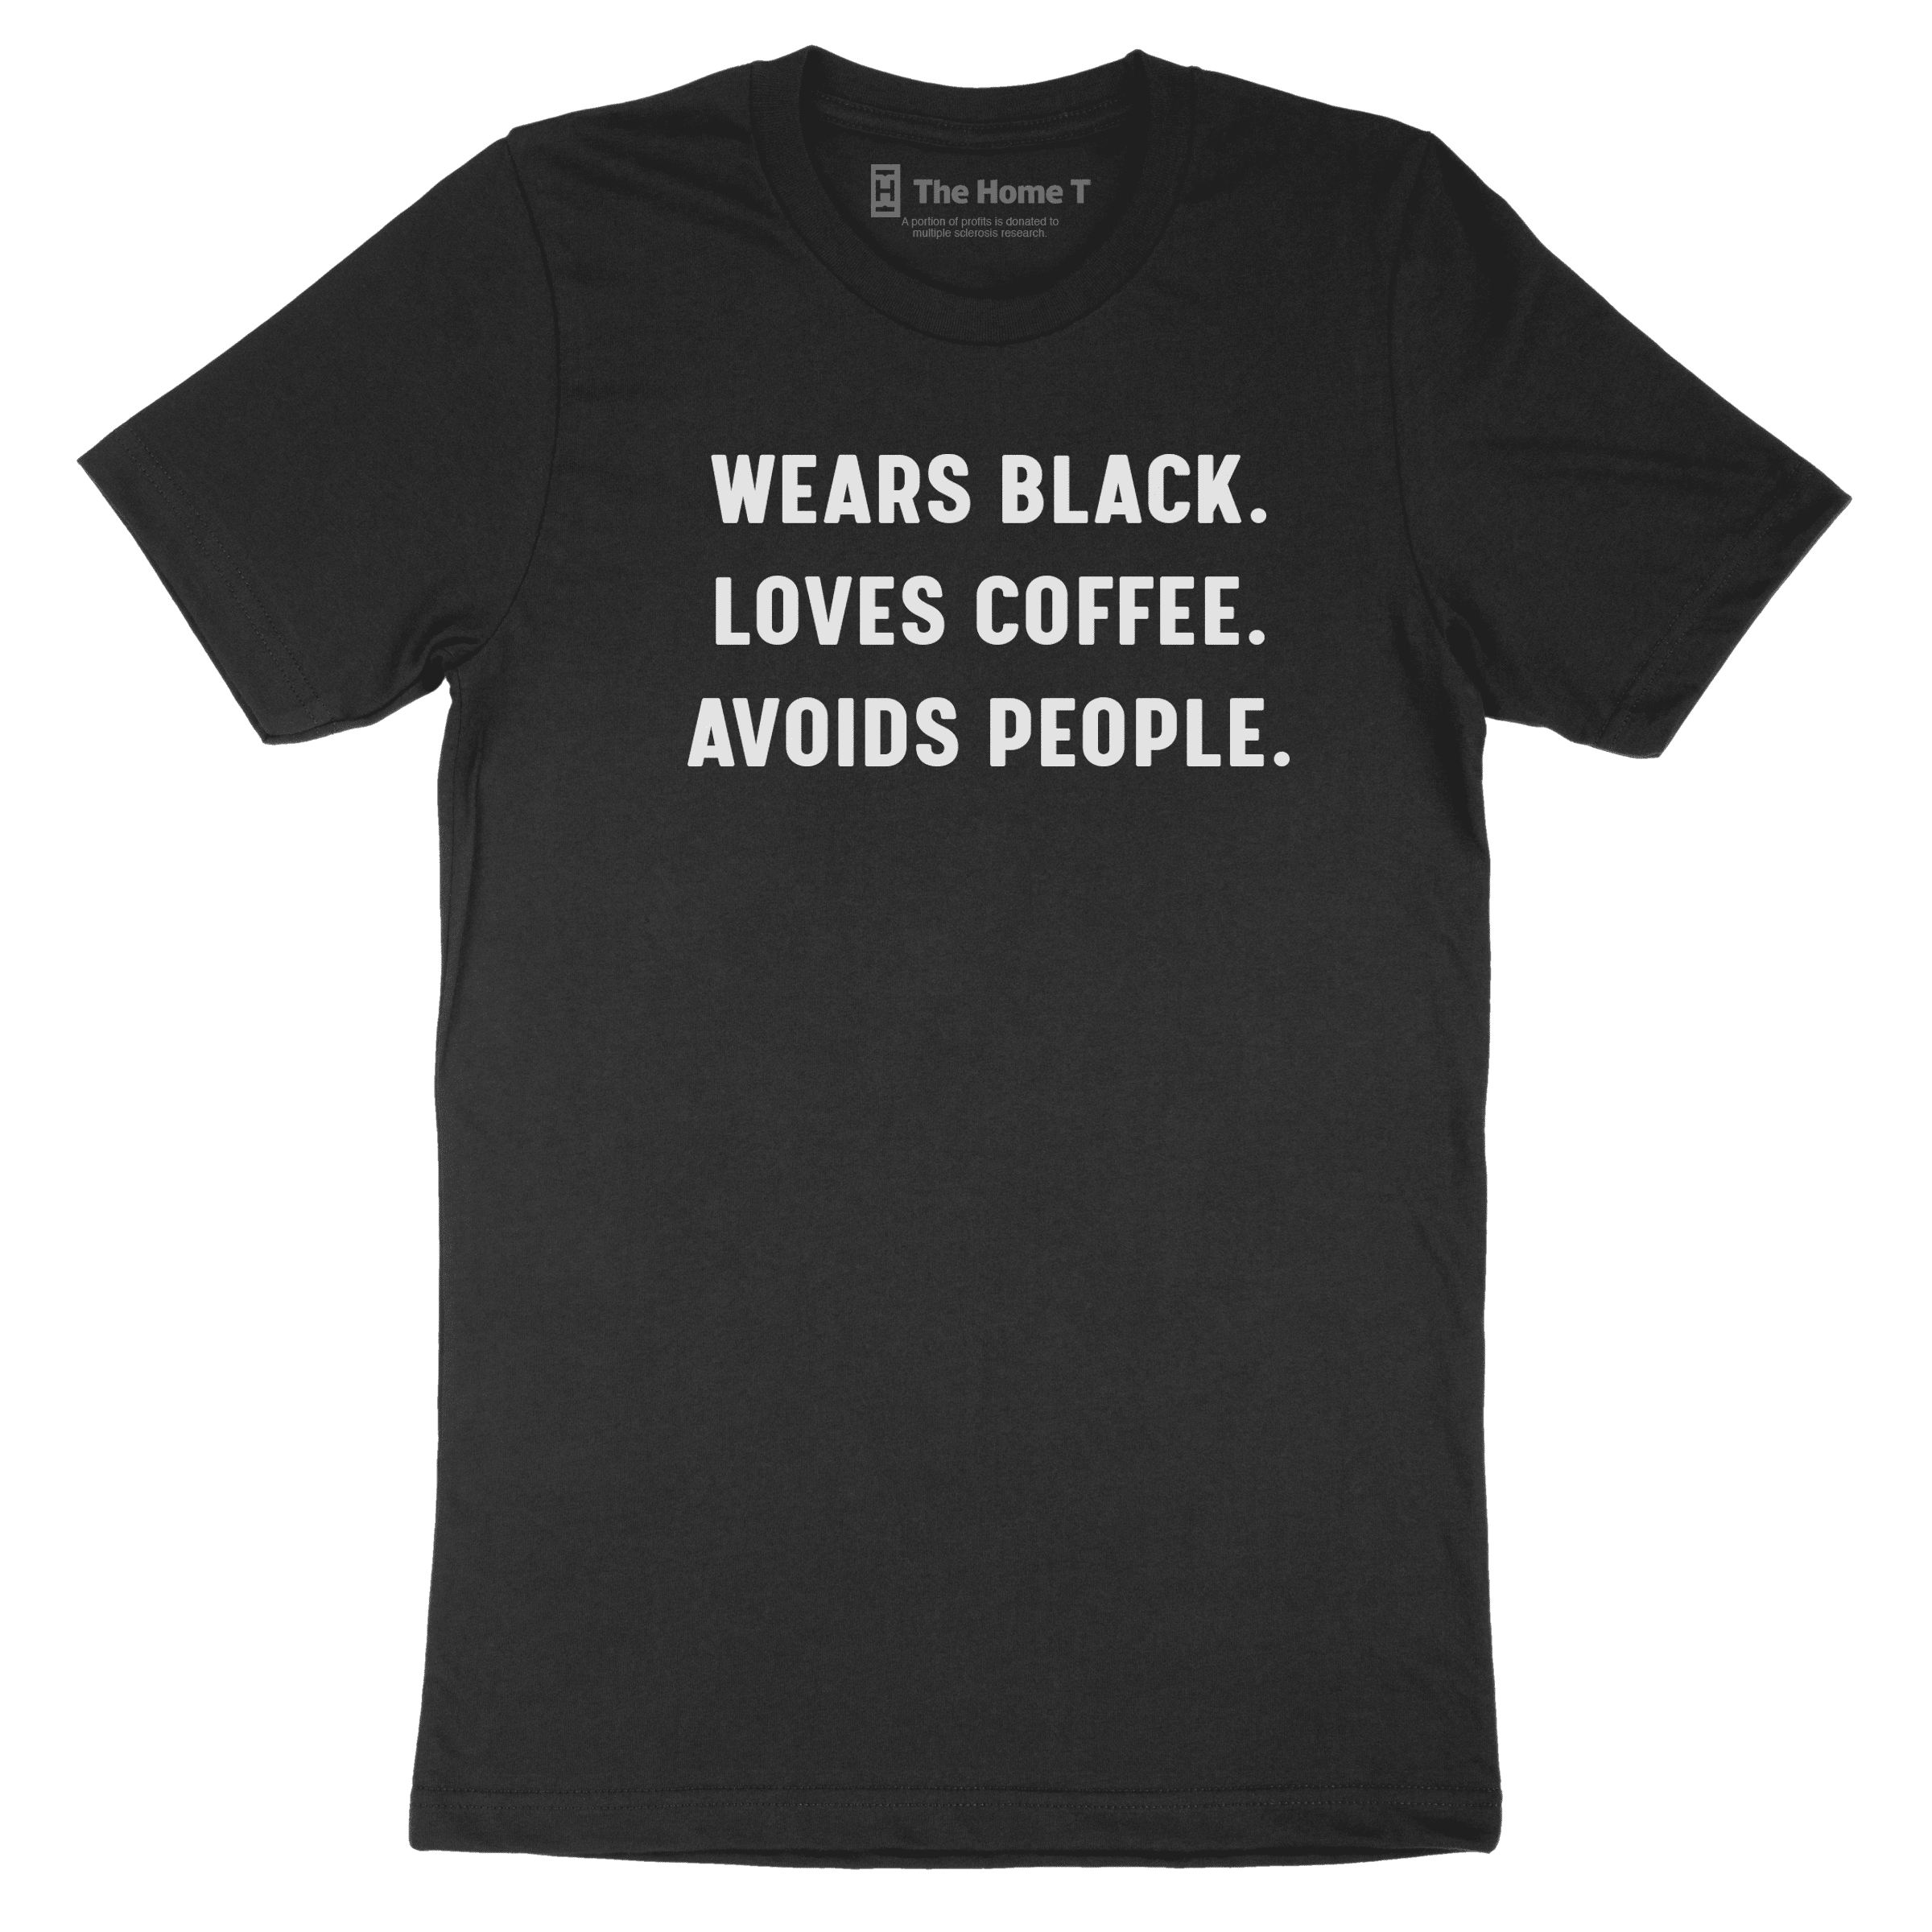 Wears Black. Loves Coffee. Avoids People.